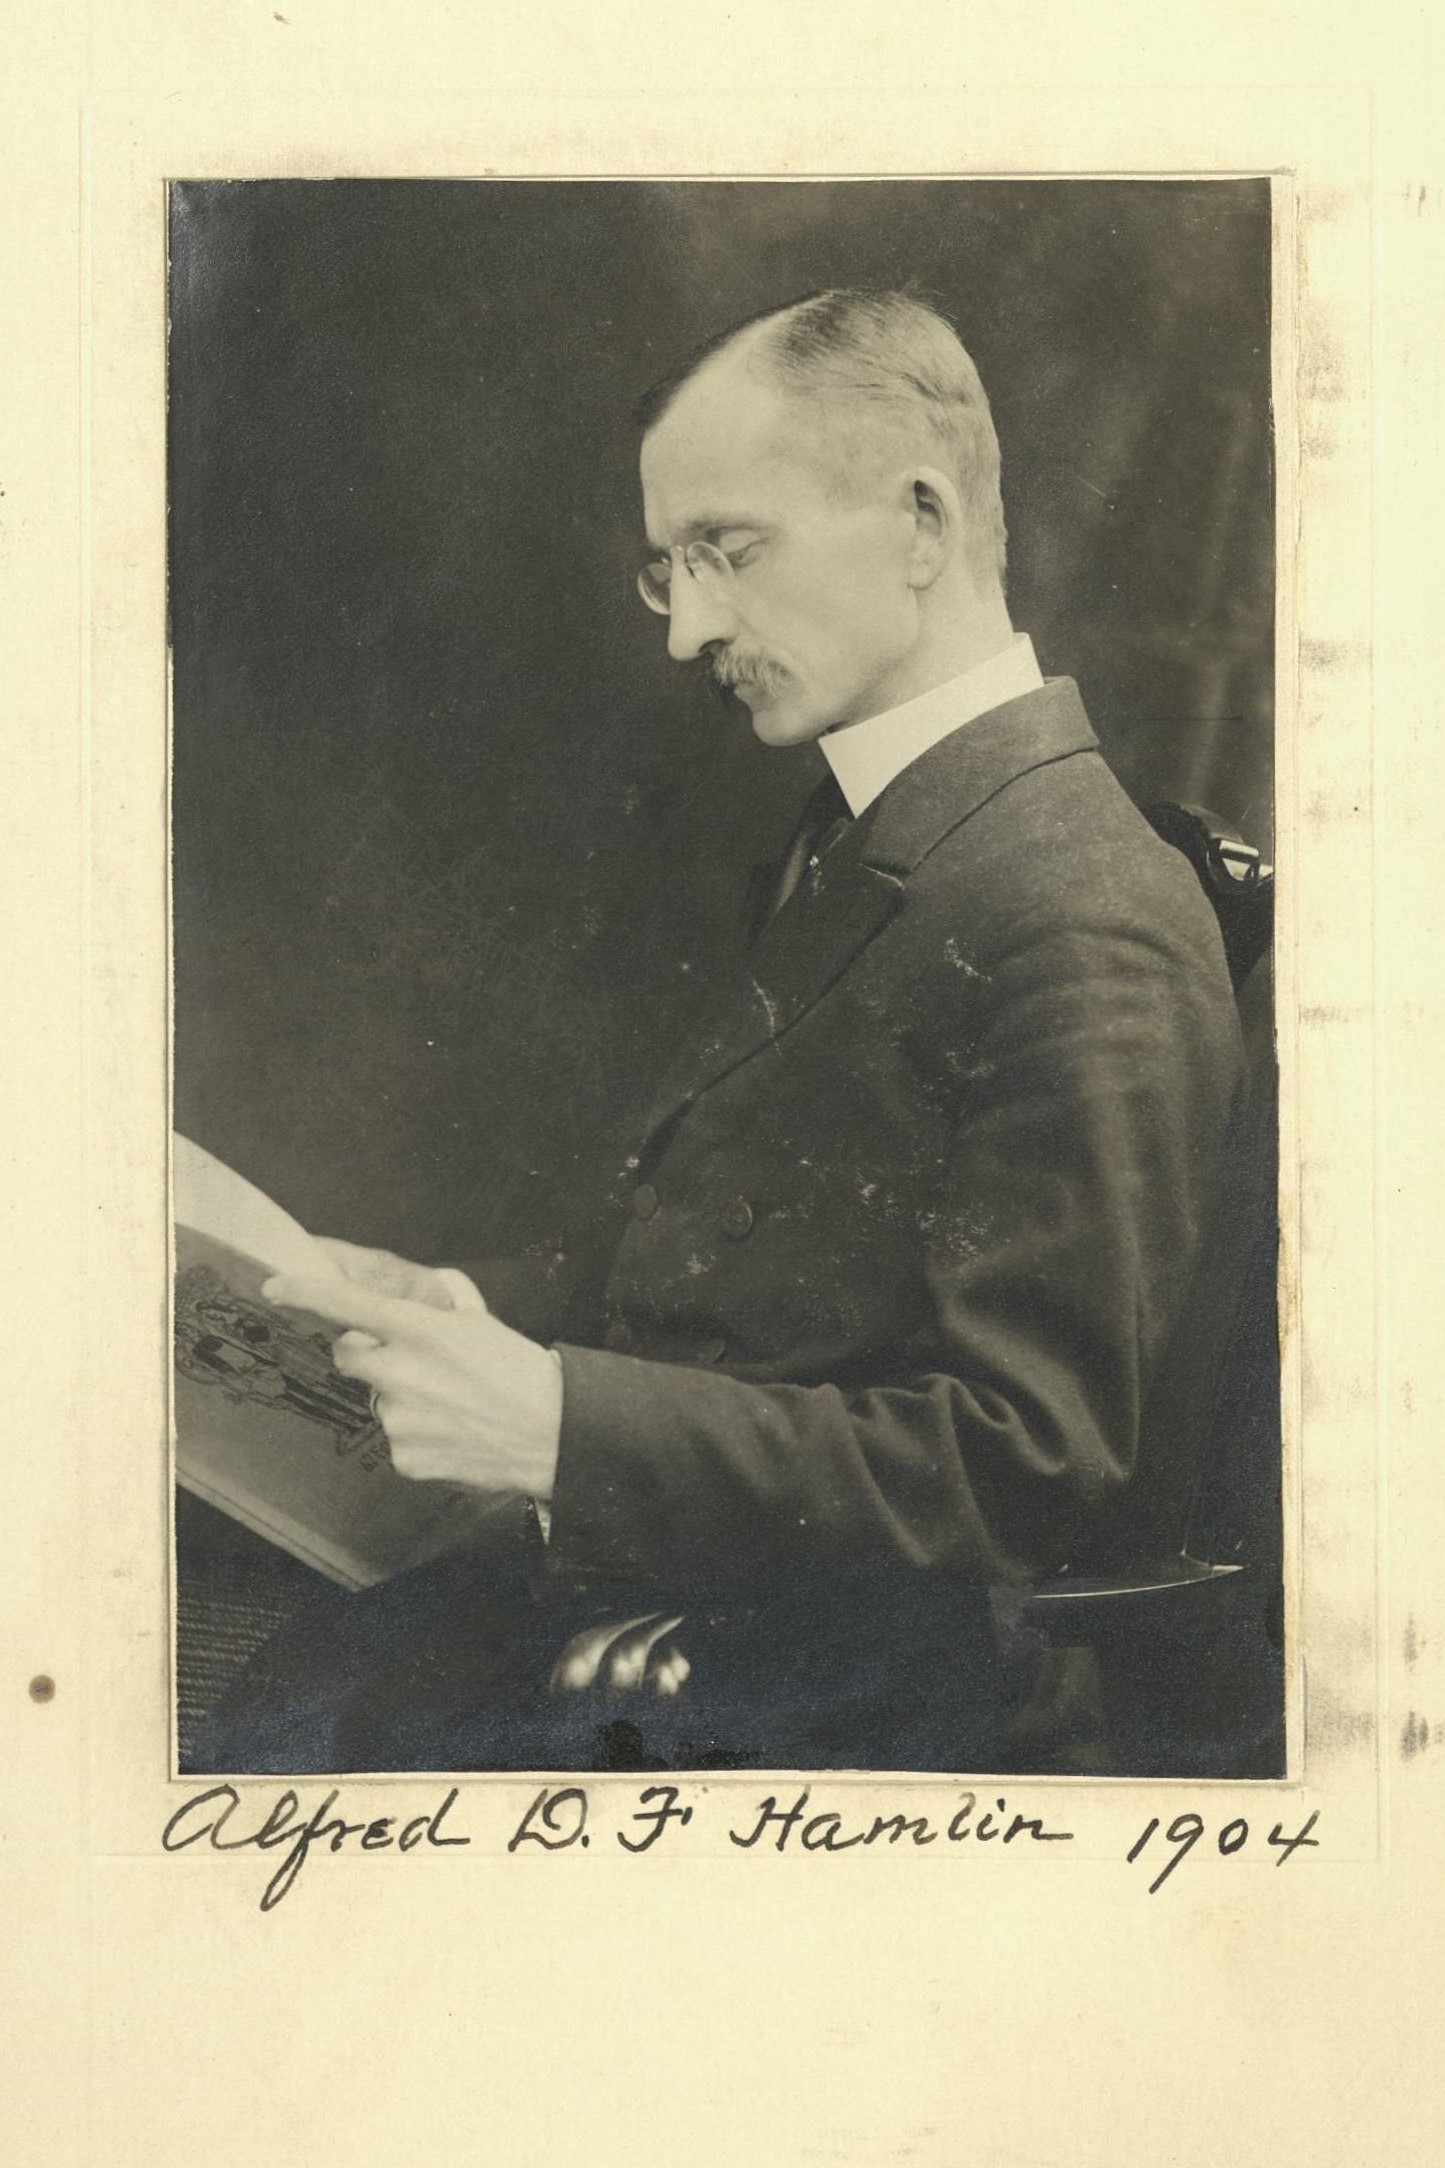 Member portrait of Alfred D. F. Hamlin